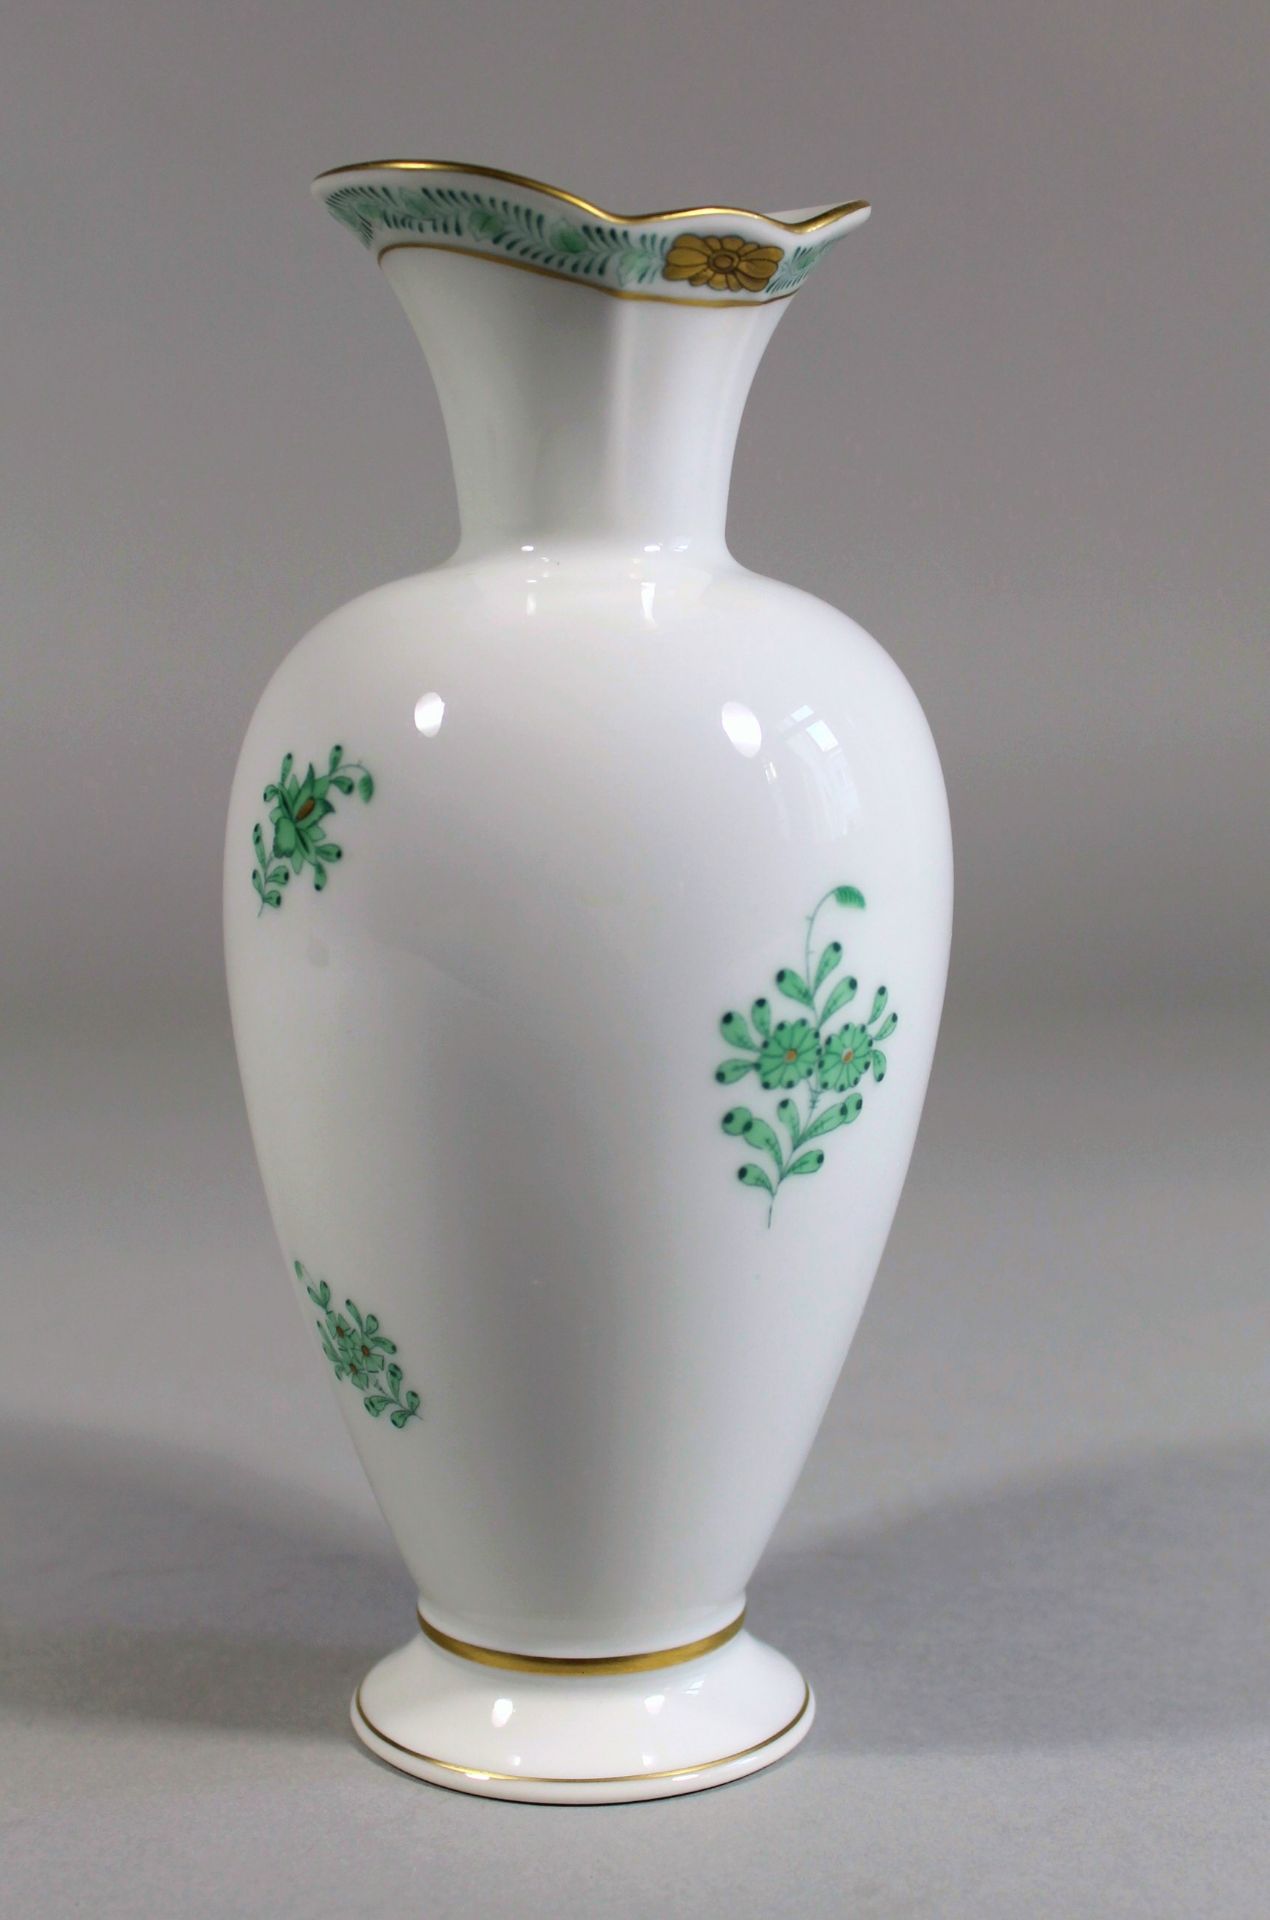 1 Vase Porzellan "Herend", Apponydekor in grün, Goldstaffage, aufglasur, H ca. 19,5cm, - Image 2 of 2